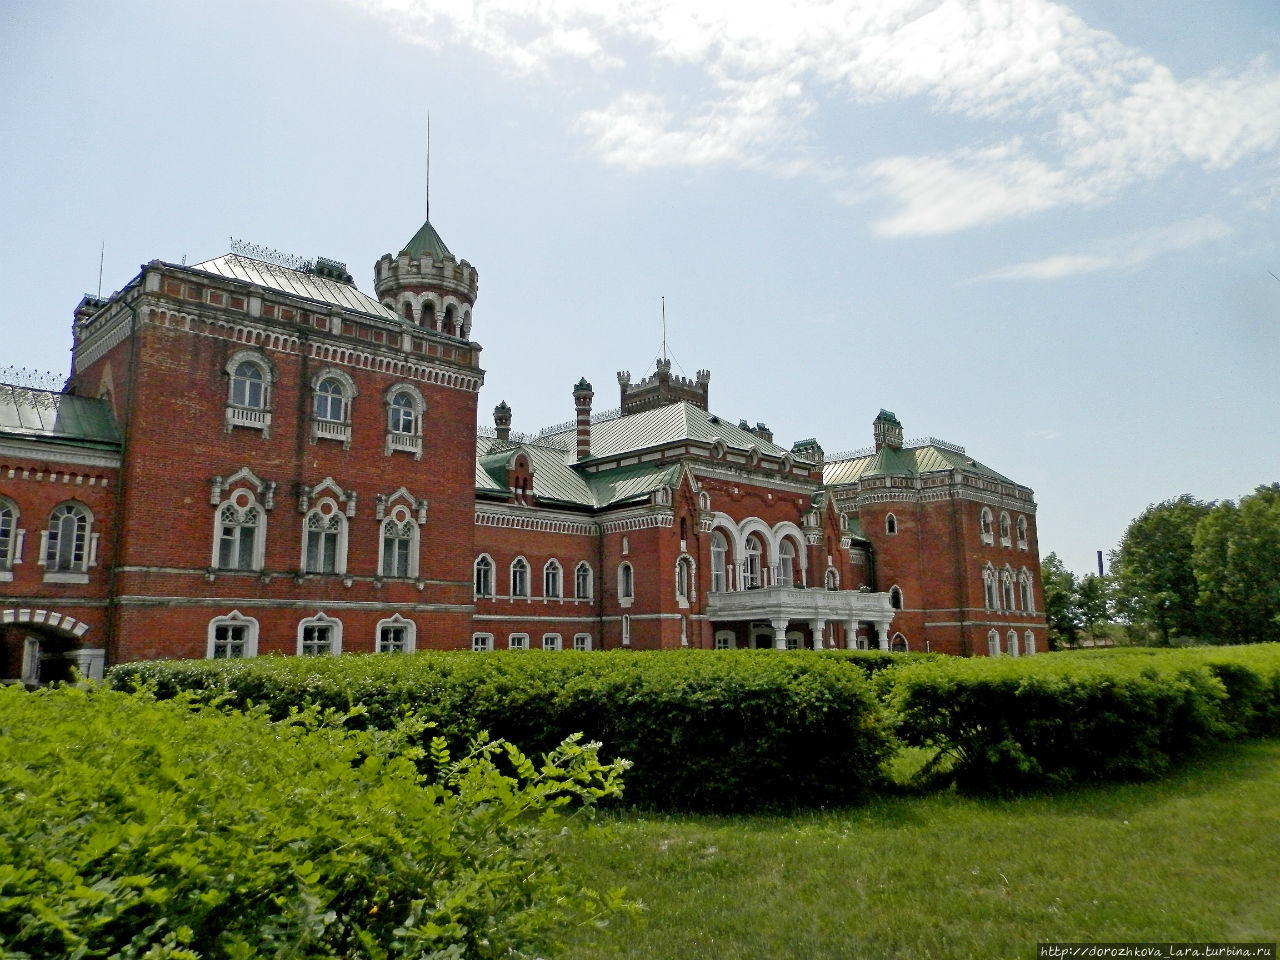 Юрино. Замок Шереметева Юрино, Россия